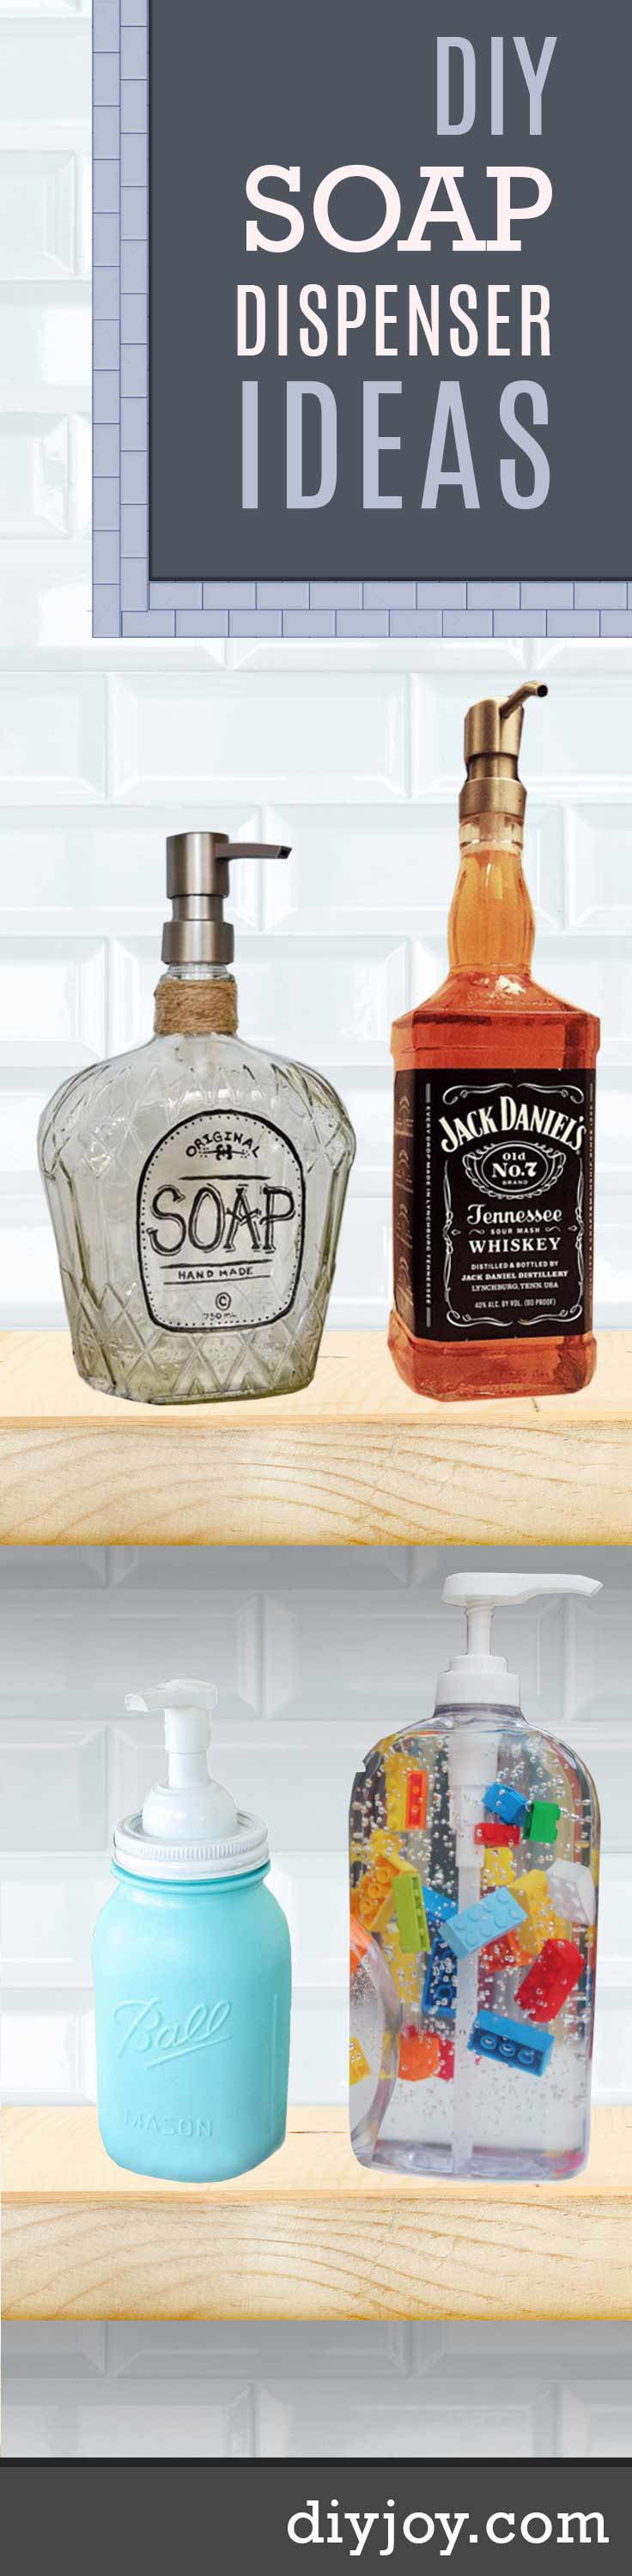 DIY Soap Dispenser Ideas | Do It Yourself Kitchen and Bath Decor at http://diyjoy.com/craft-ideas-diy-soap-dispensers